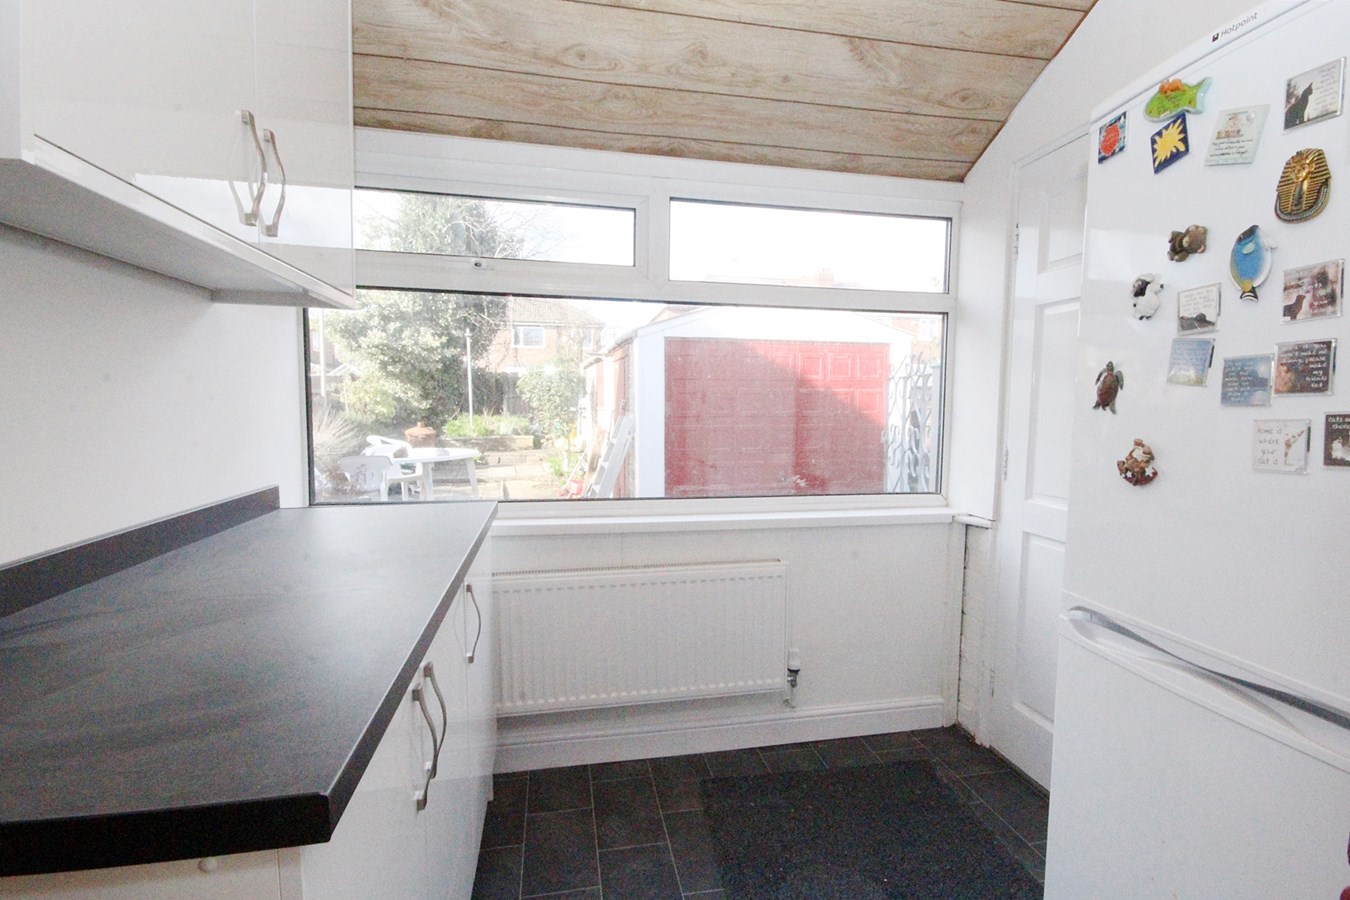 2 Bedrooms Semi-detached house to rent in Ash Road, Penketh, Warrington WA5